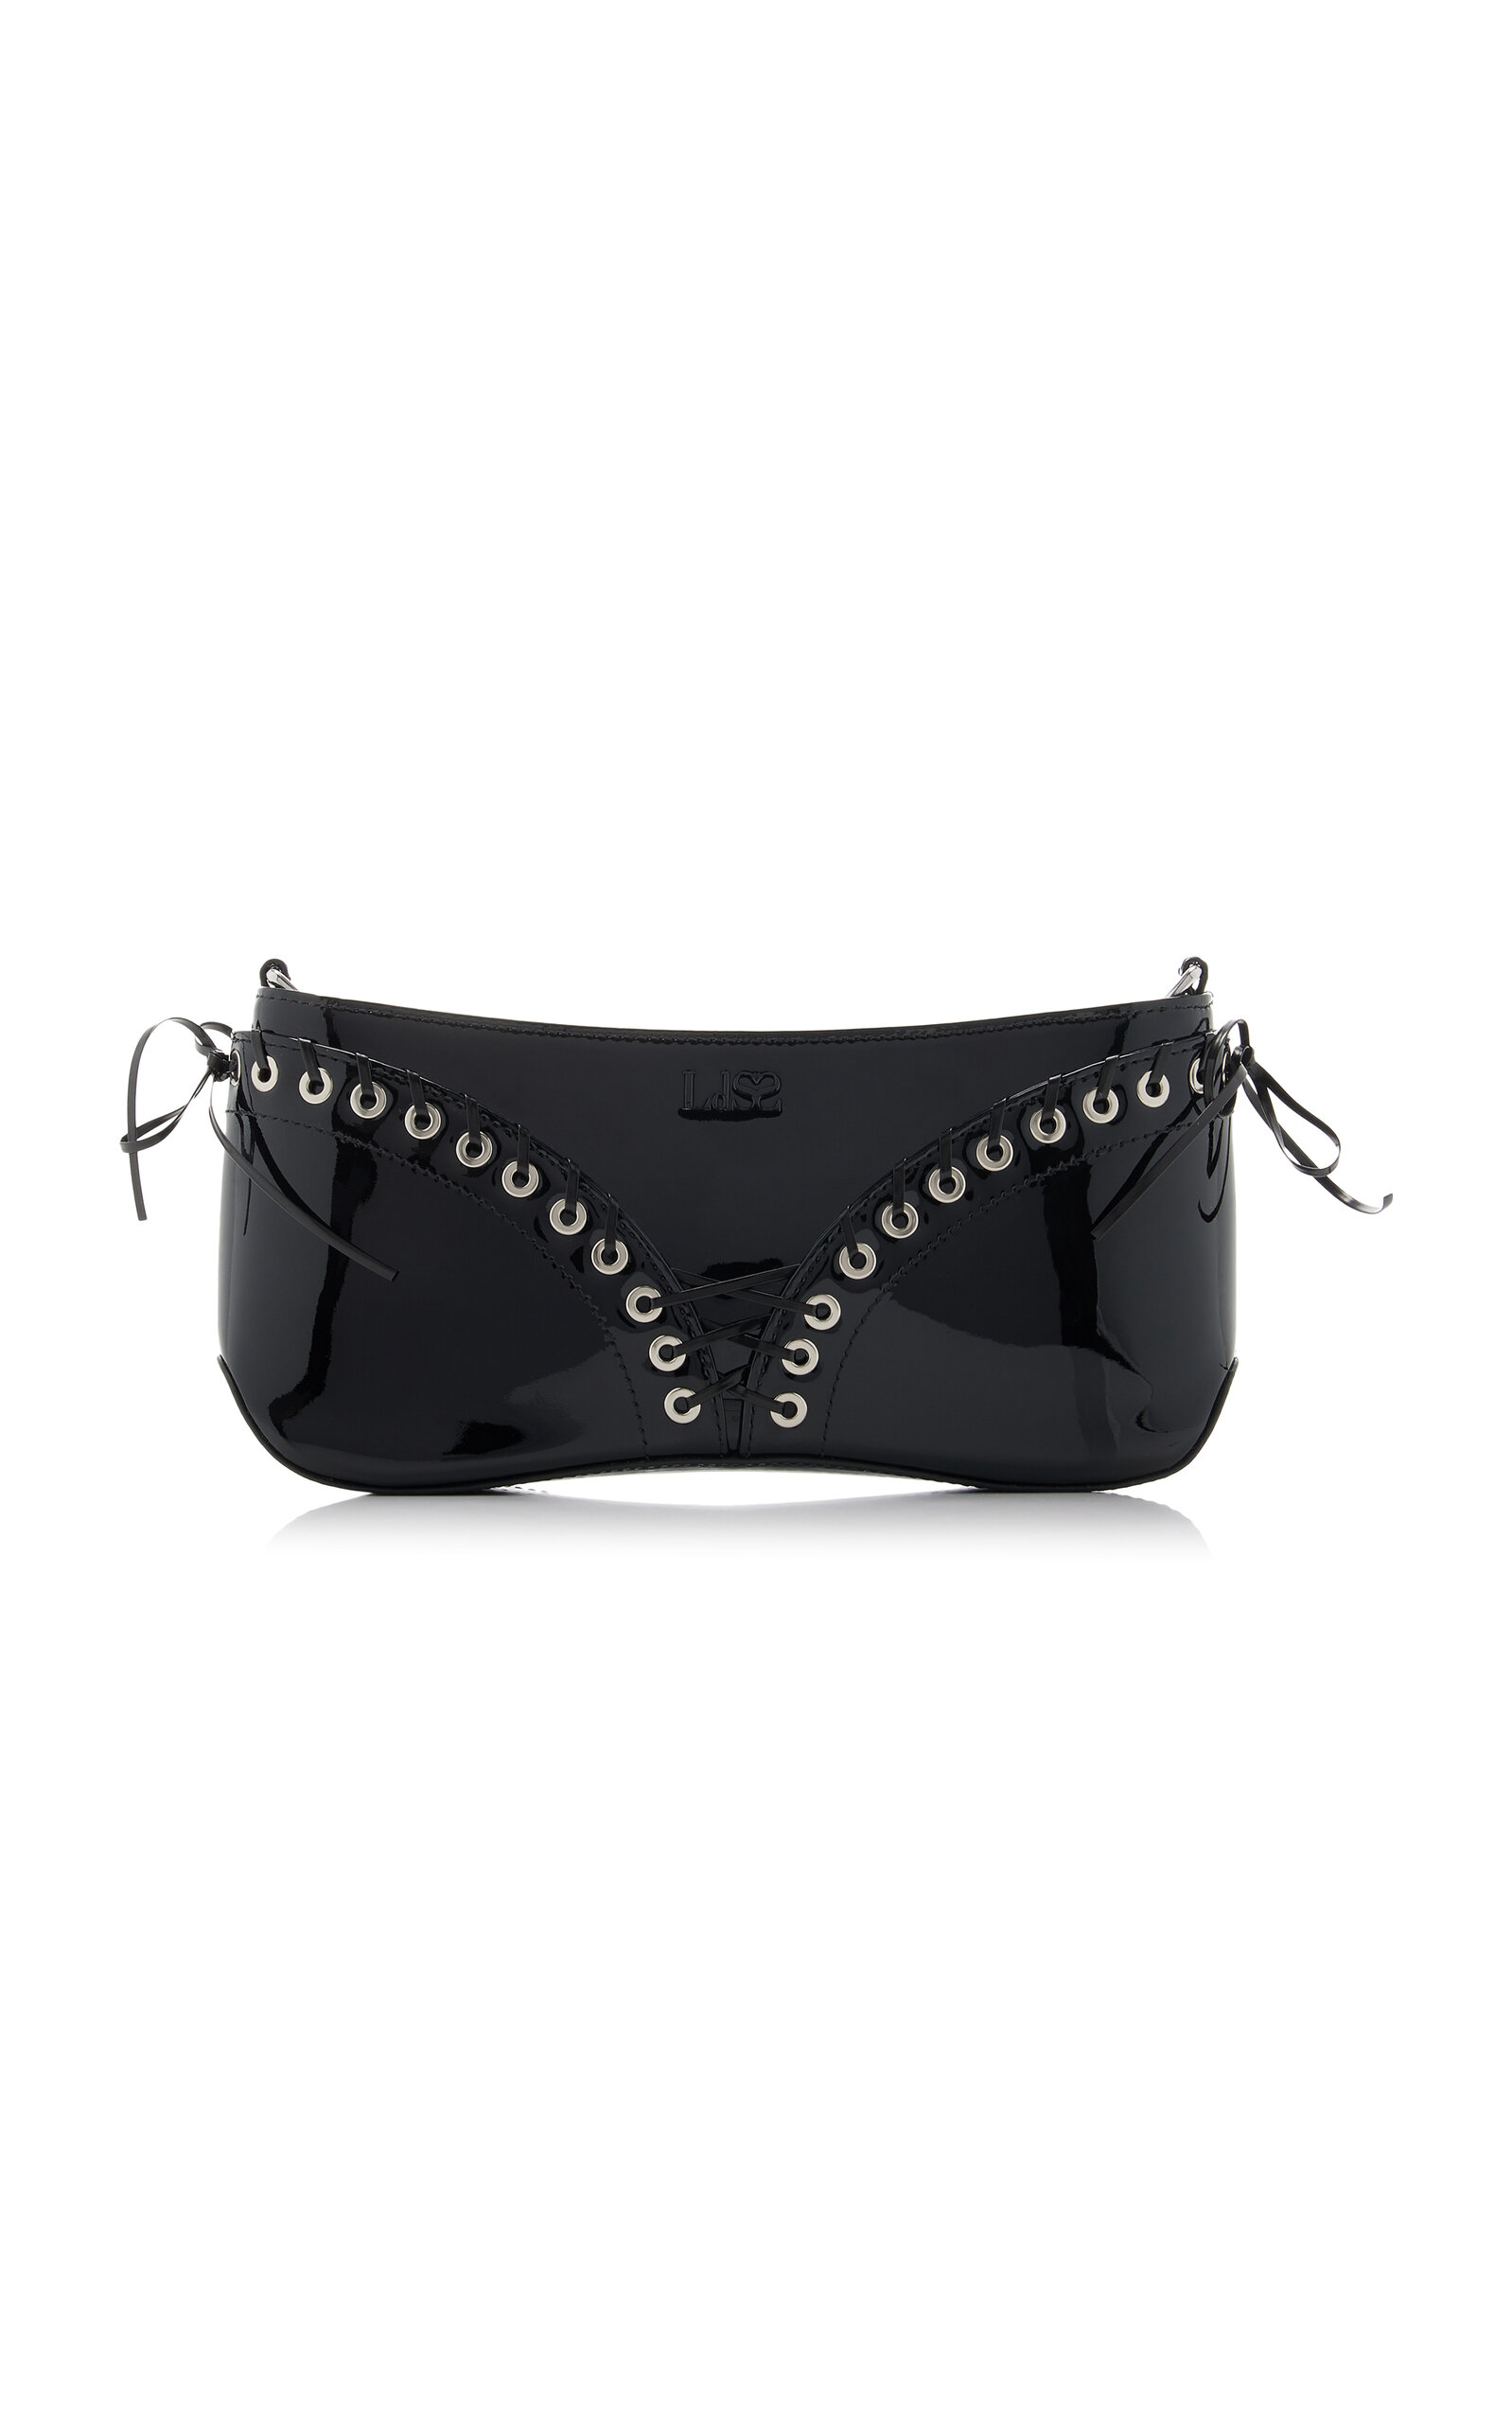 Ludovic de Saint Sernin - Cleavage Patent Leather Bag - Black - OS - Only At Moda Operandi